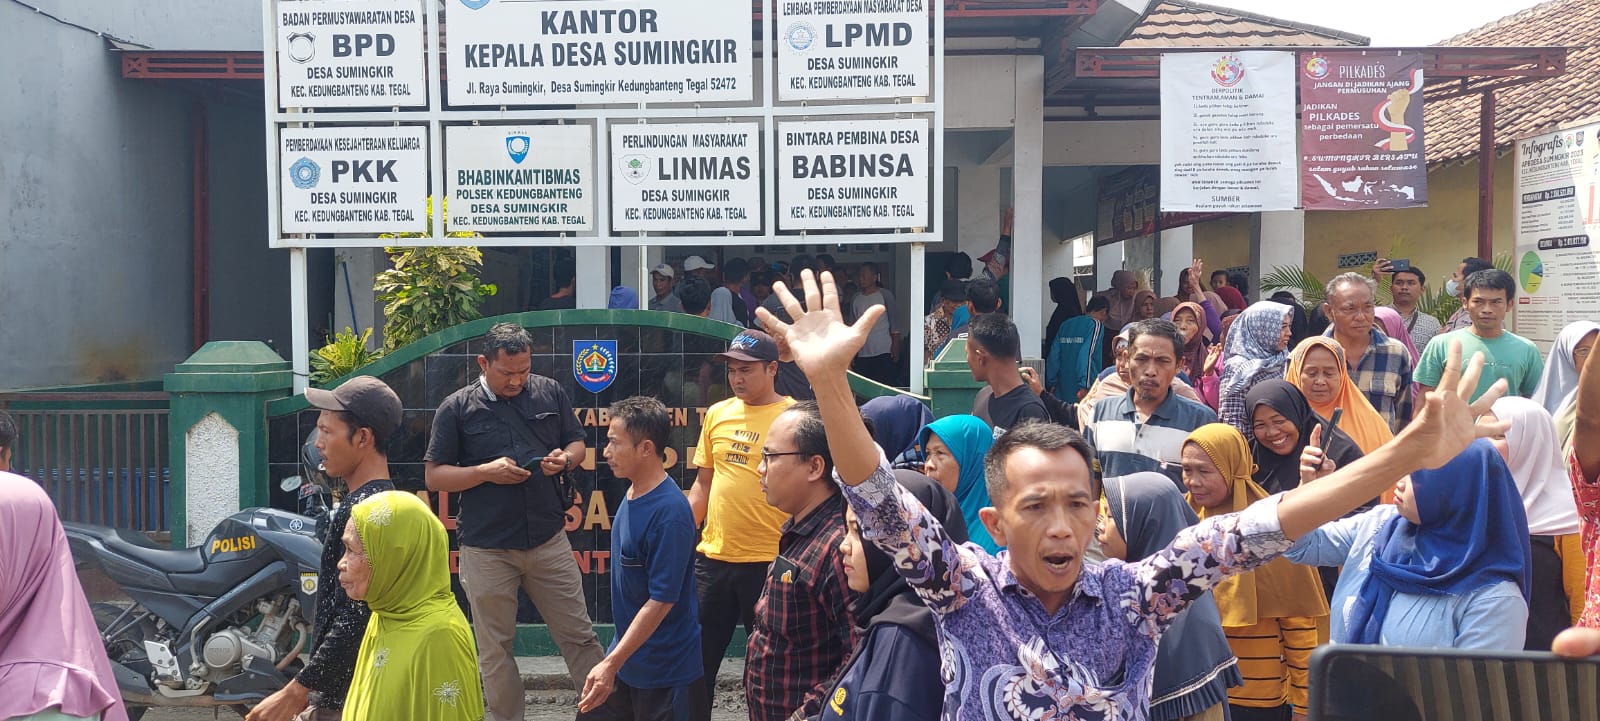 Panas! Panitia Pilkades Sumingkir Kabupaten Tegal Diprotes, Puluhan Warga Geruduk Balai Desa 